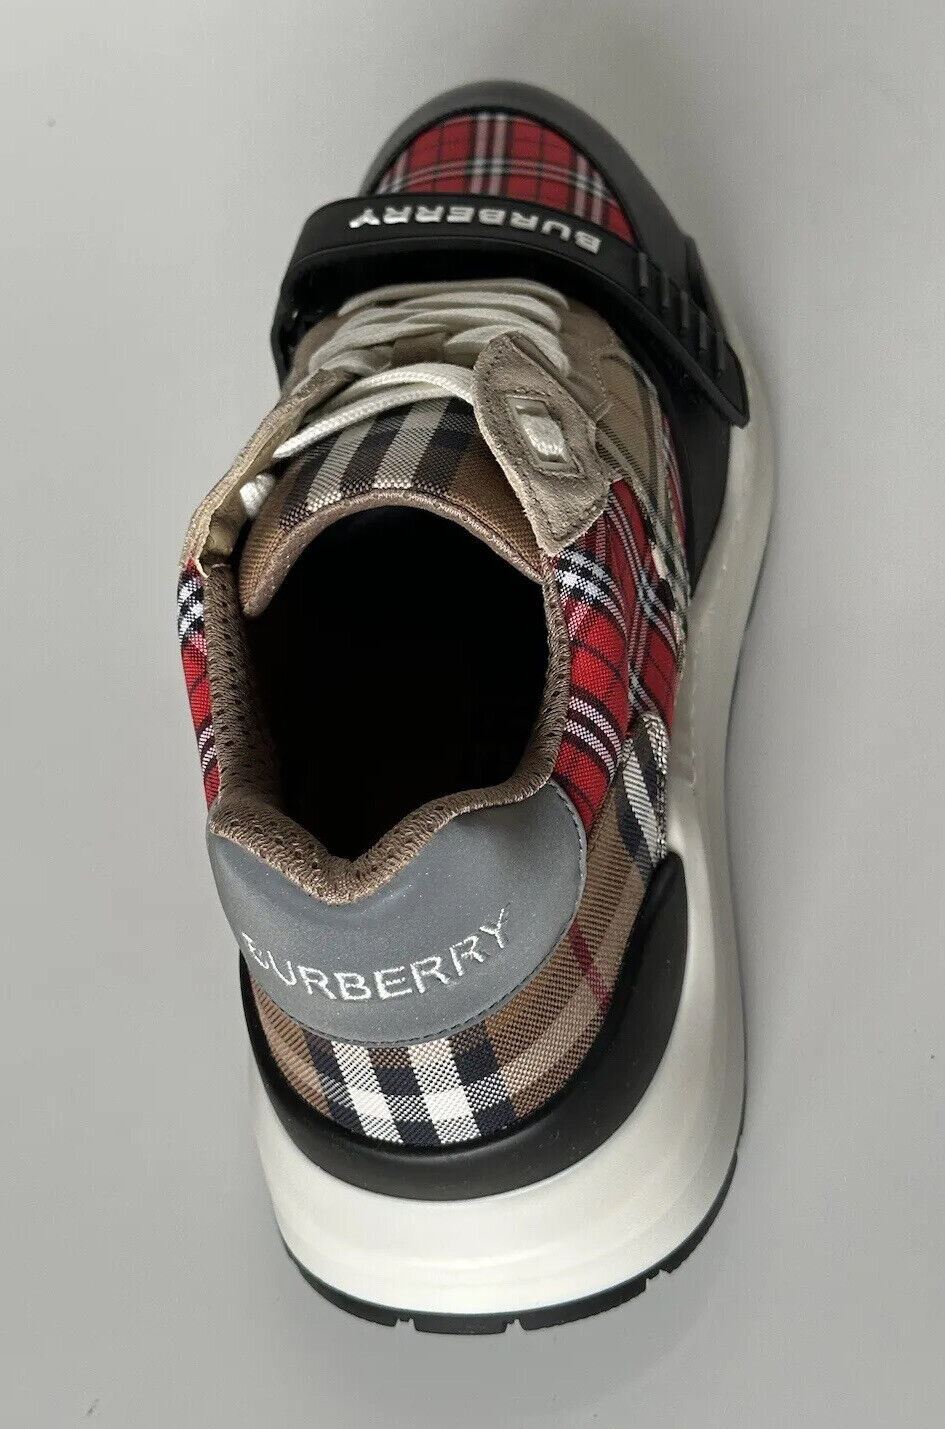 NIB 790 $ Burberry Herren Ramsey Mehrfarbige Sneakers 12 US (45 Euro) 8048632 Italien 